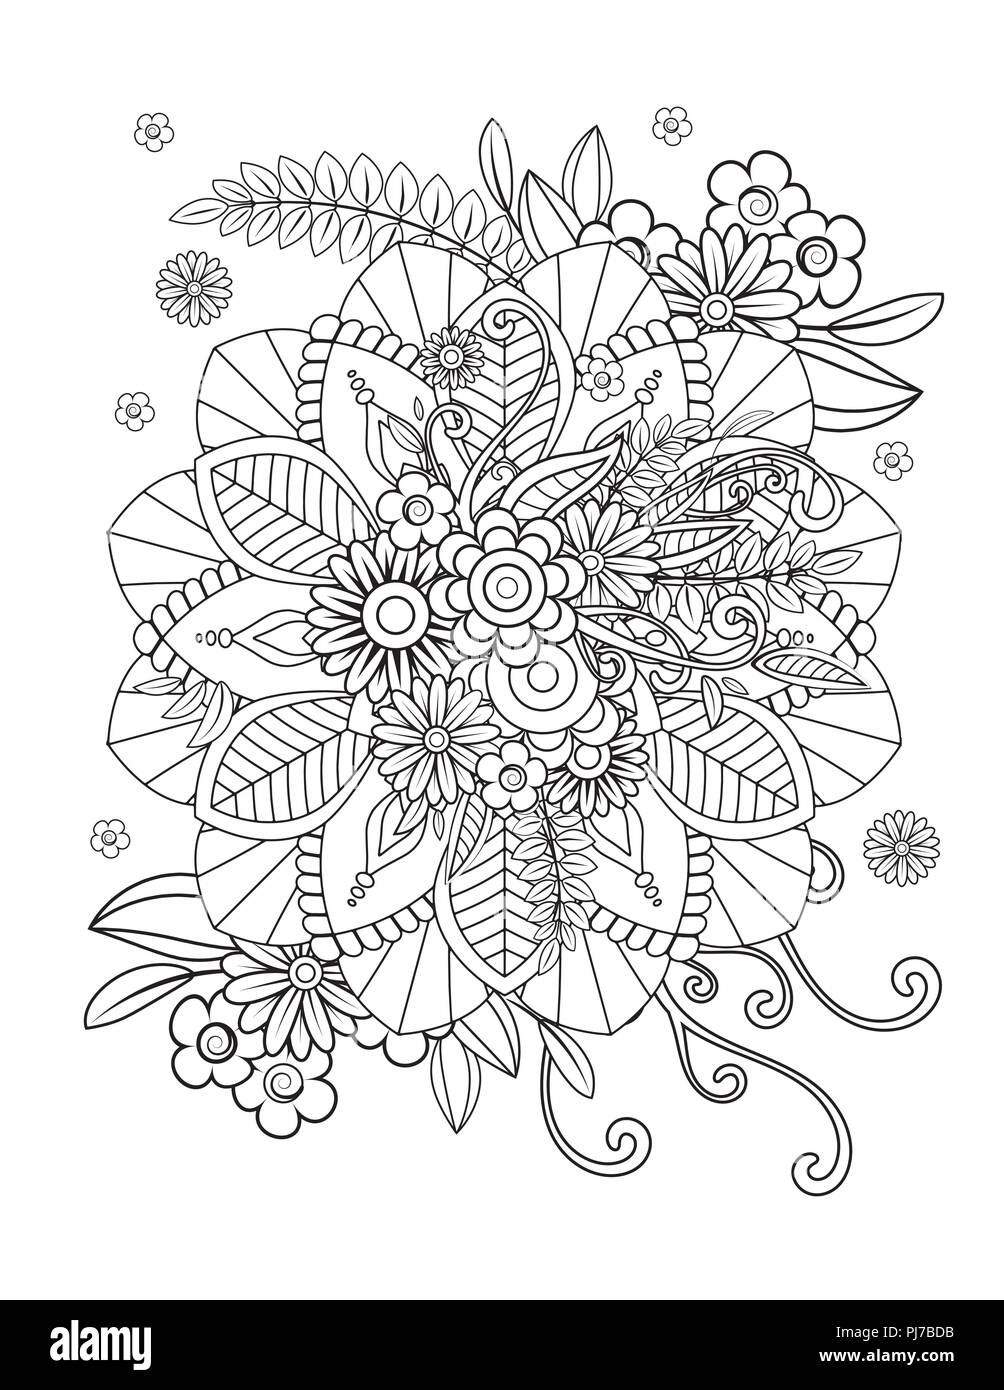 Mandala illustration mandalas pattern hi-res stock photography and images -  Page 3 - Alamy